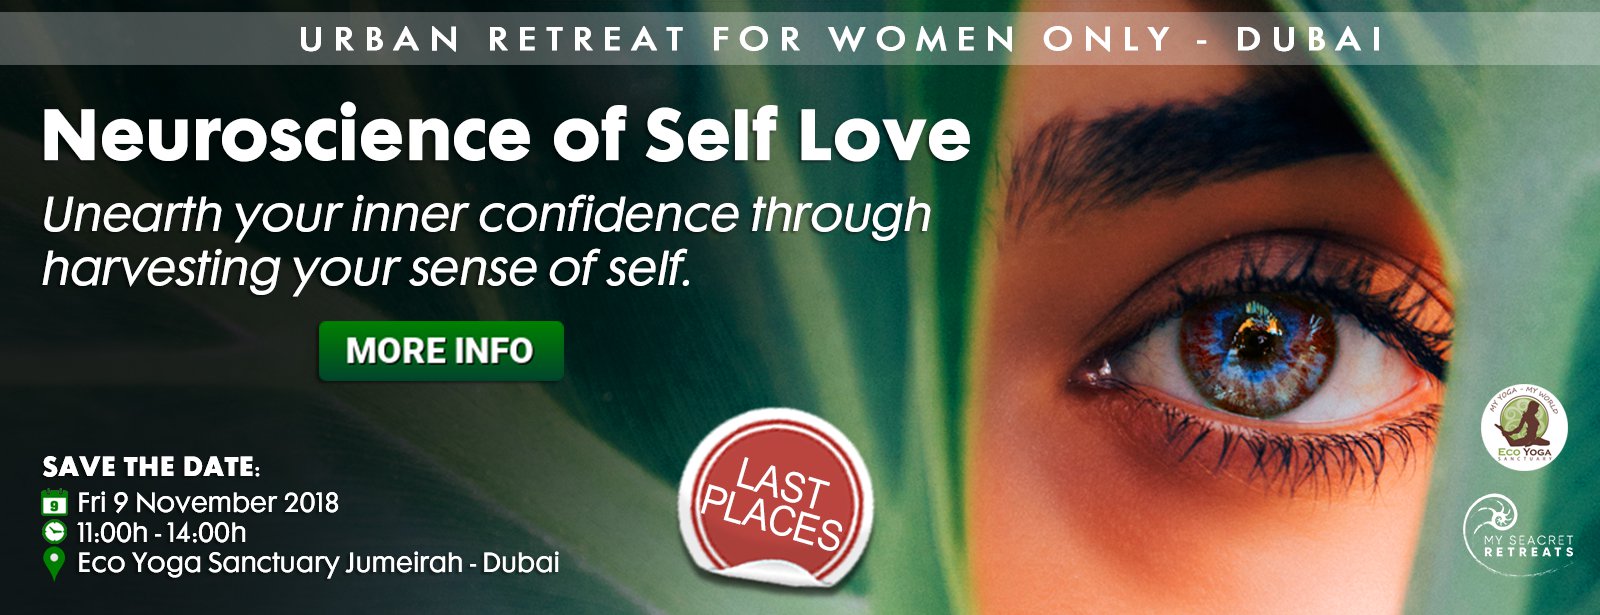 Neuroscience of Self Love – Urban Retreat for women only - Coming Soon in UAE